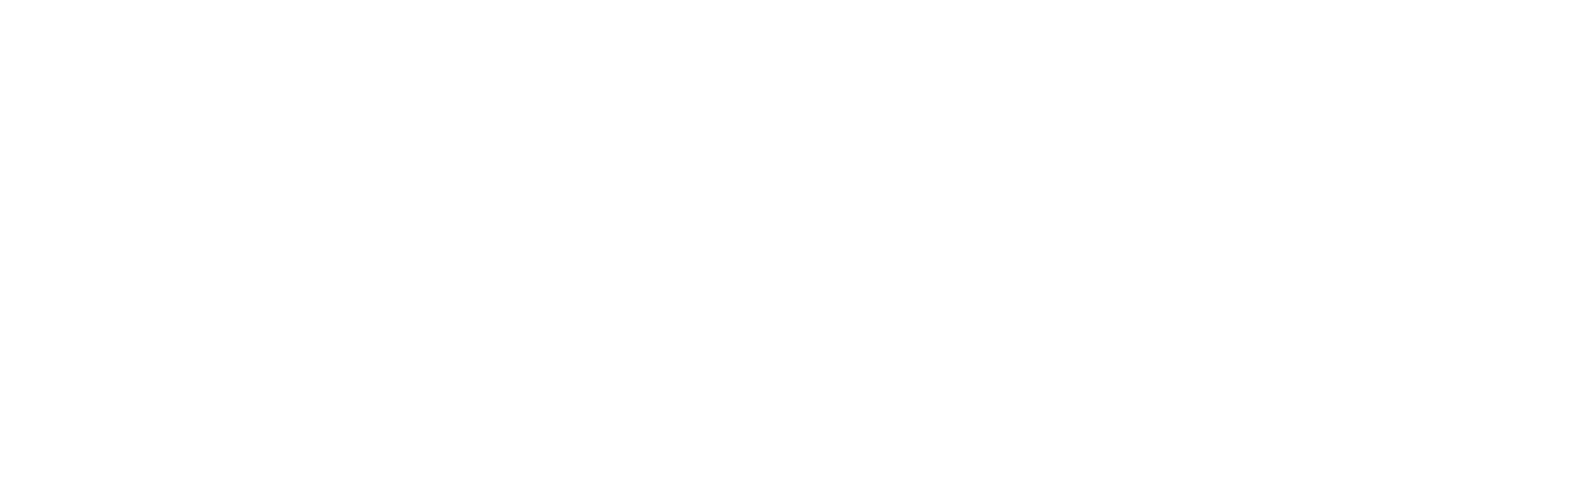 Airgain logo large for dark backgrounds (transparent PNG)